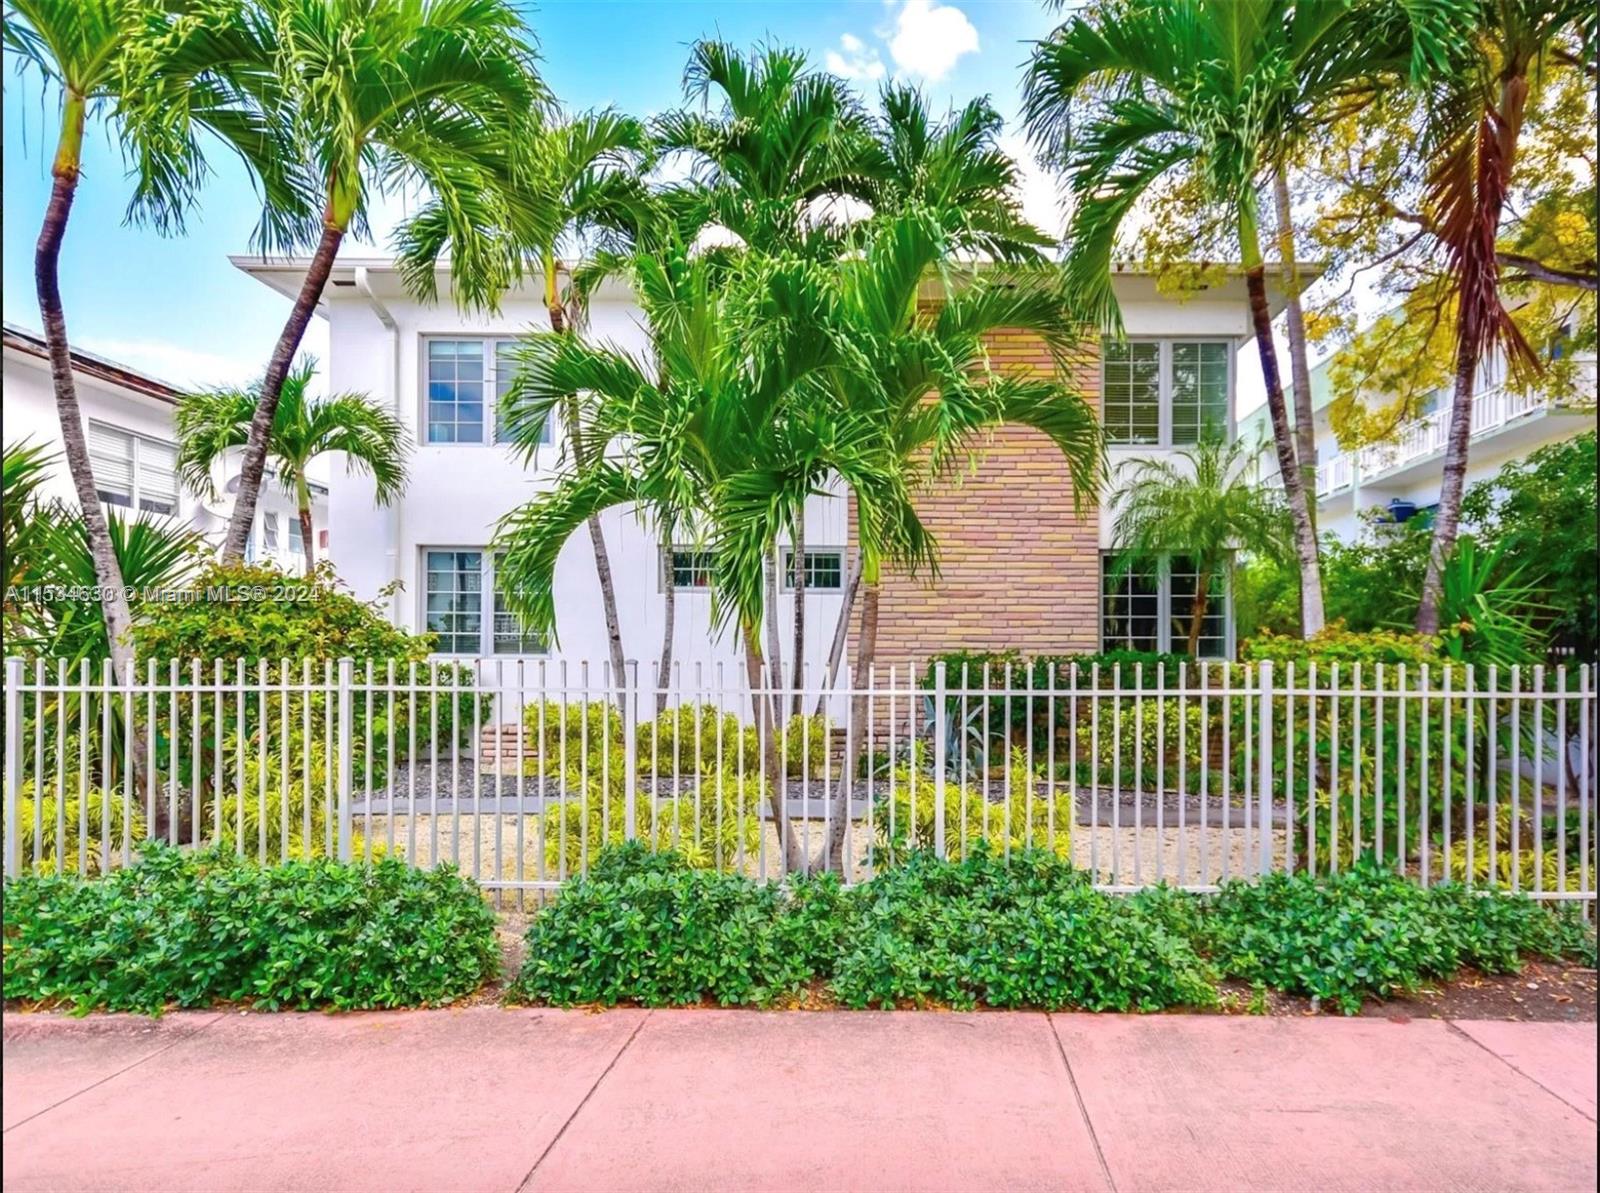 Property for Sale at 1045 Lenox Ave 7, Miami Beach, Miami-Dade County, Florida - Bedrooms: 2 
Bathrooms: 2  - $510,000